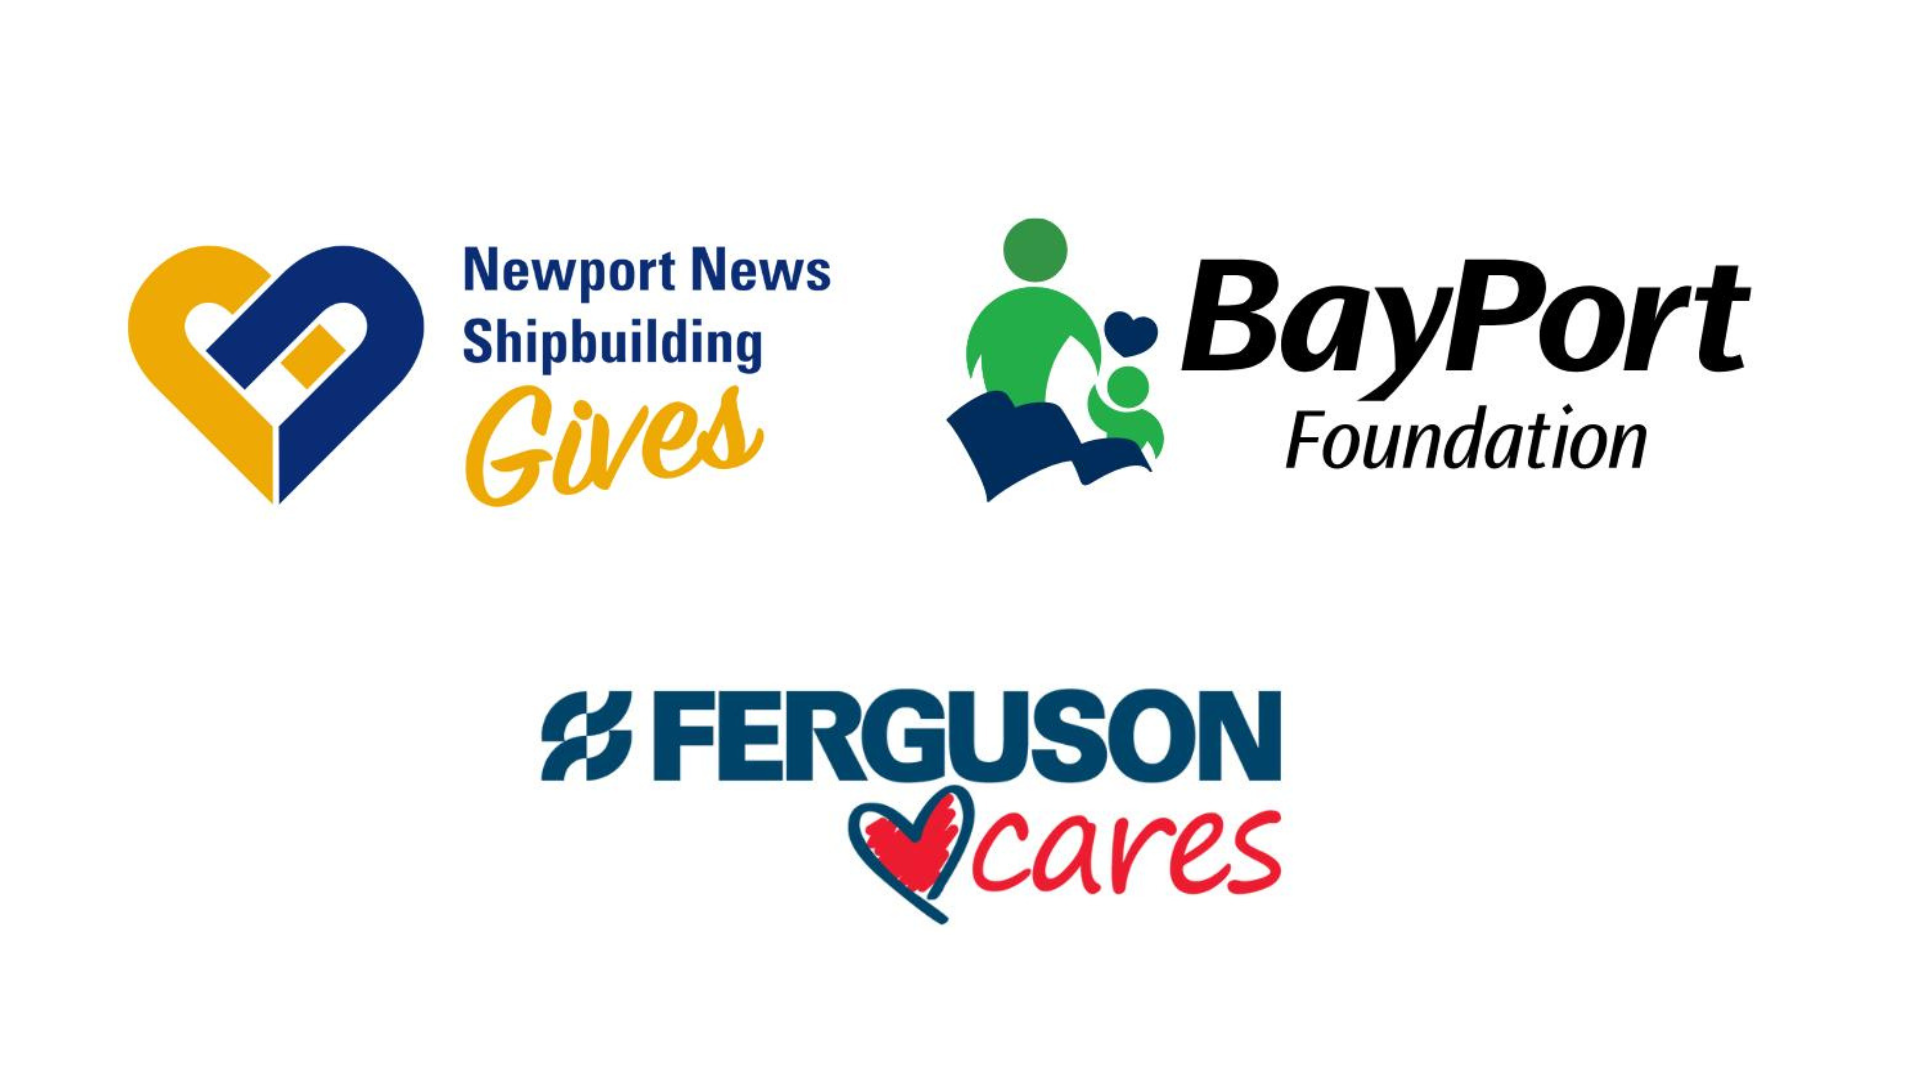 Newport News Shipbuilding Grant With Ferguson Cares And Bayport Foundation